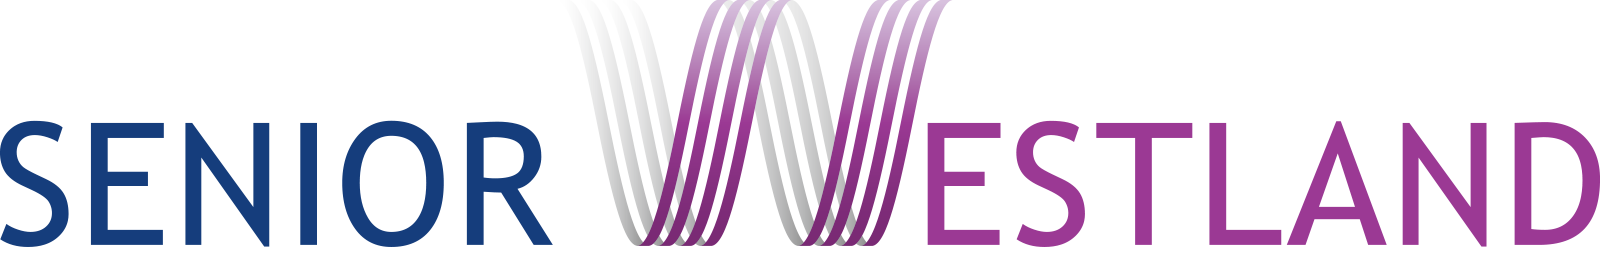 logo-senior-westland